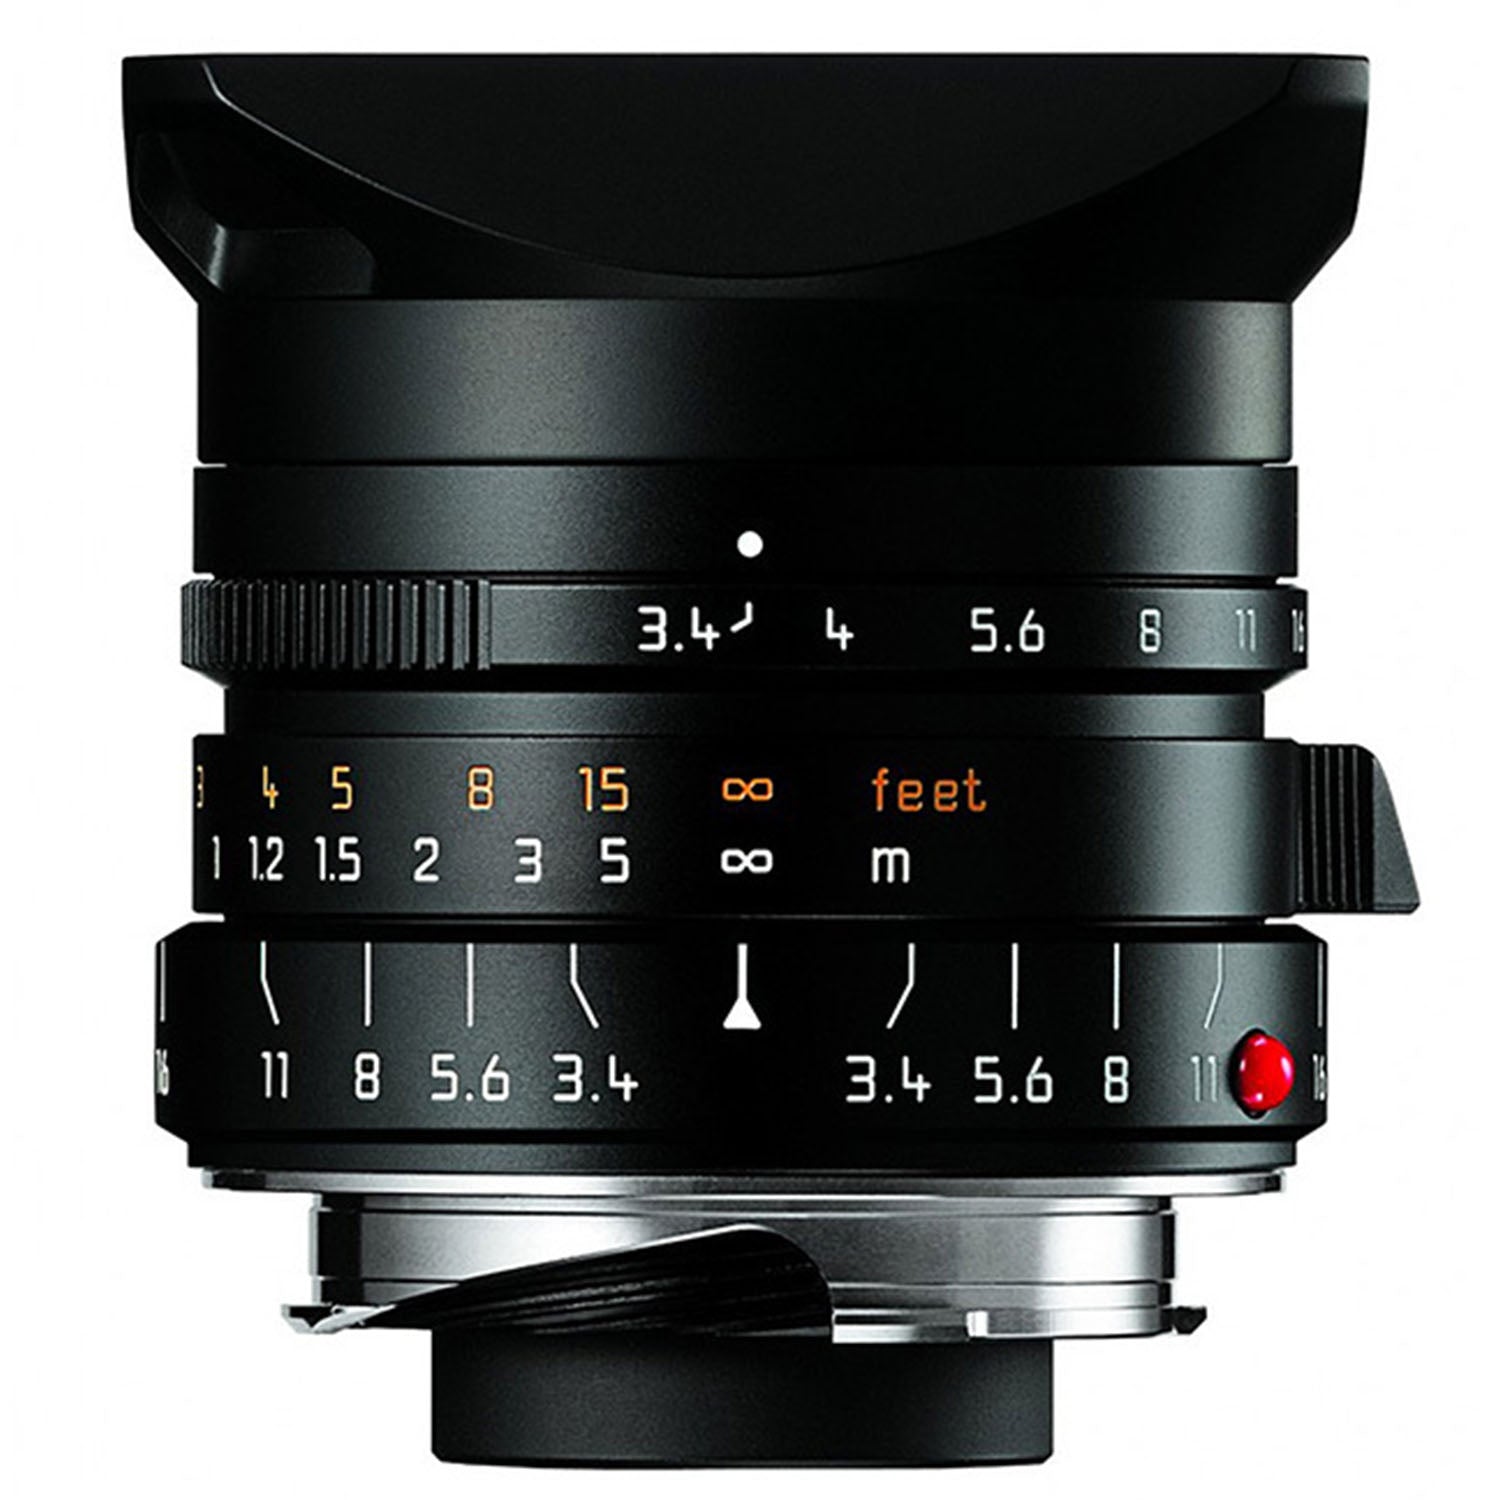 Leica M 21mm f3.4 ASPH